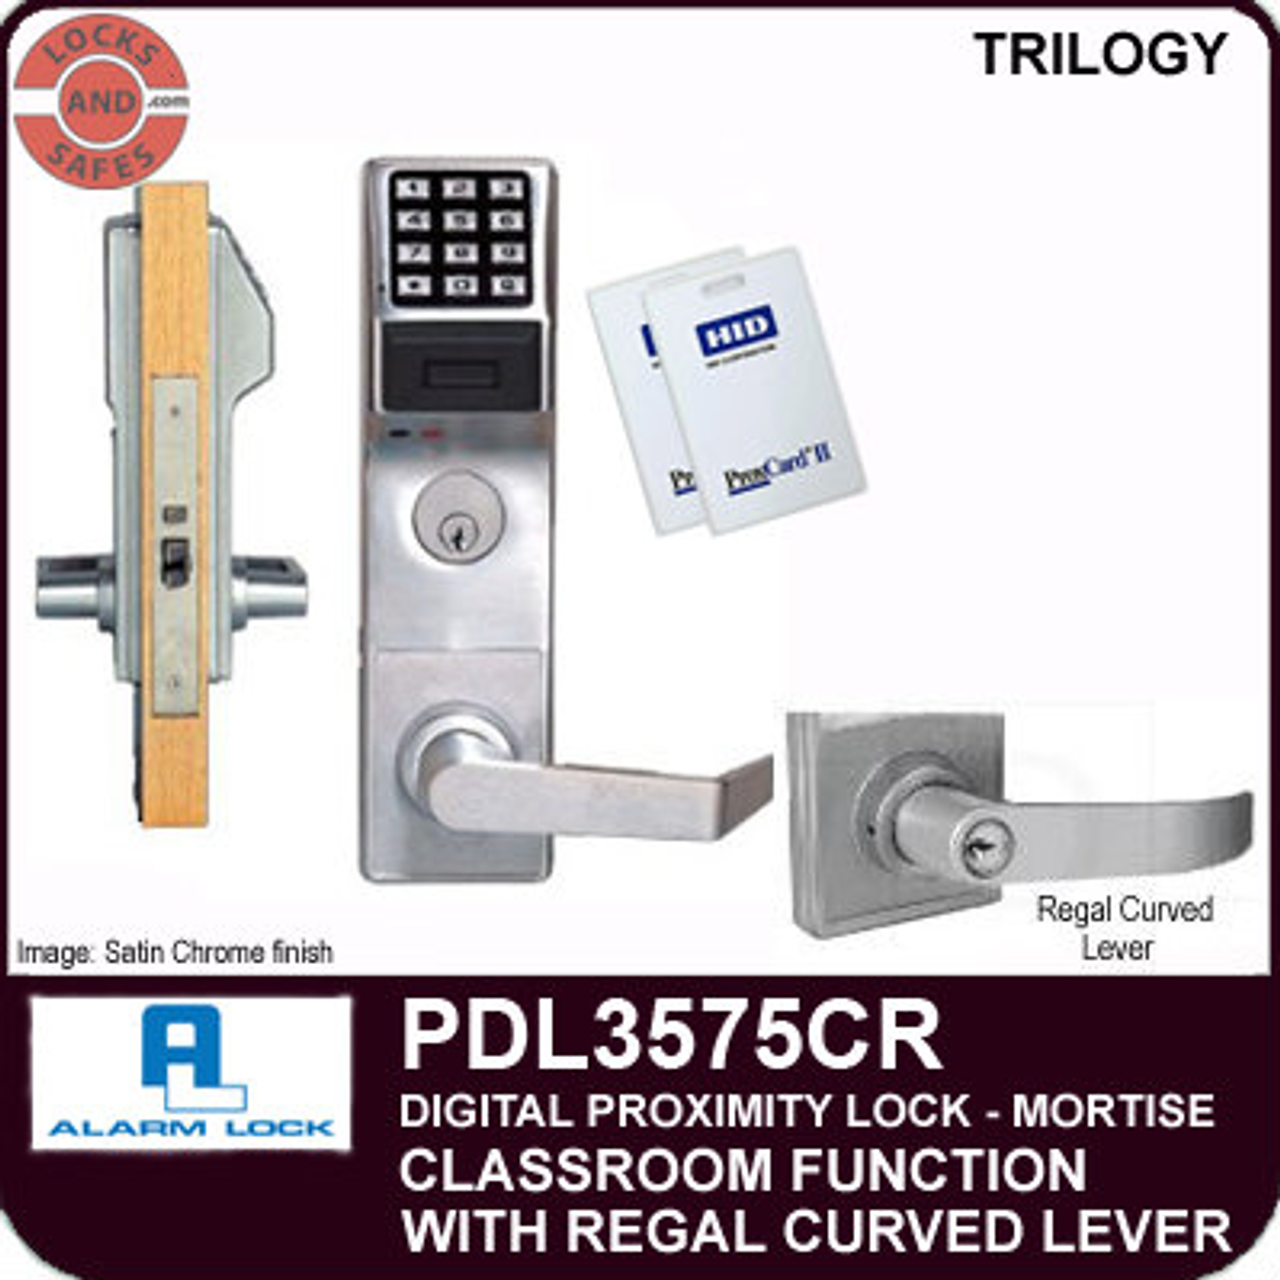 Alarm Lock Trilogy PDL3575CR PROXIMITY MORTISE LOCKS